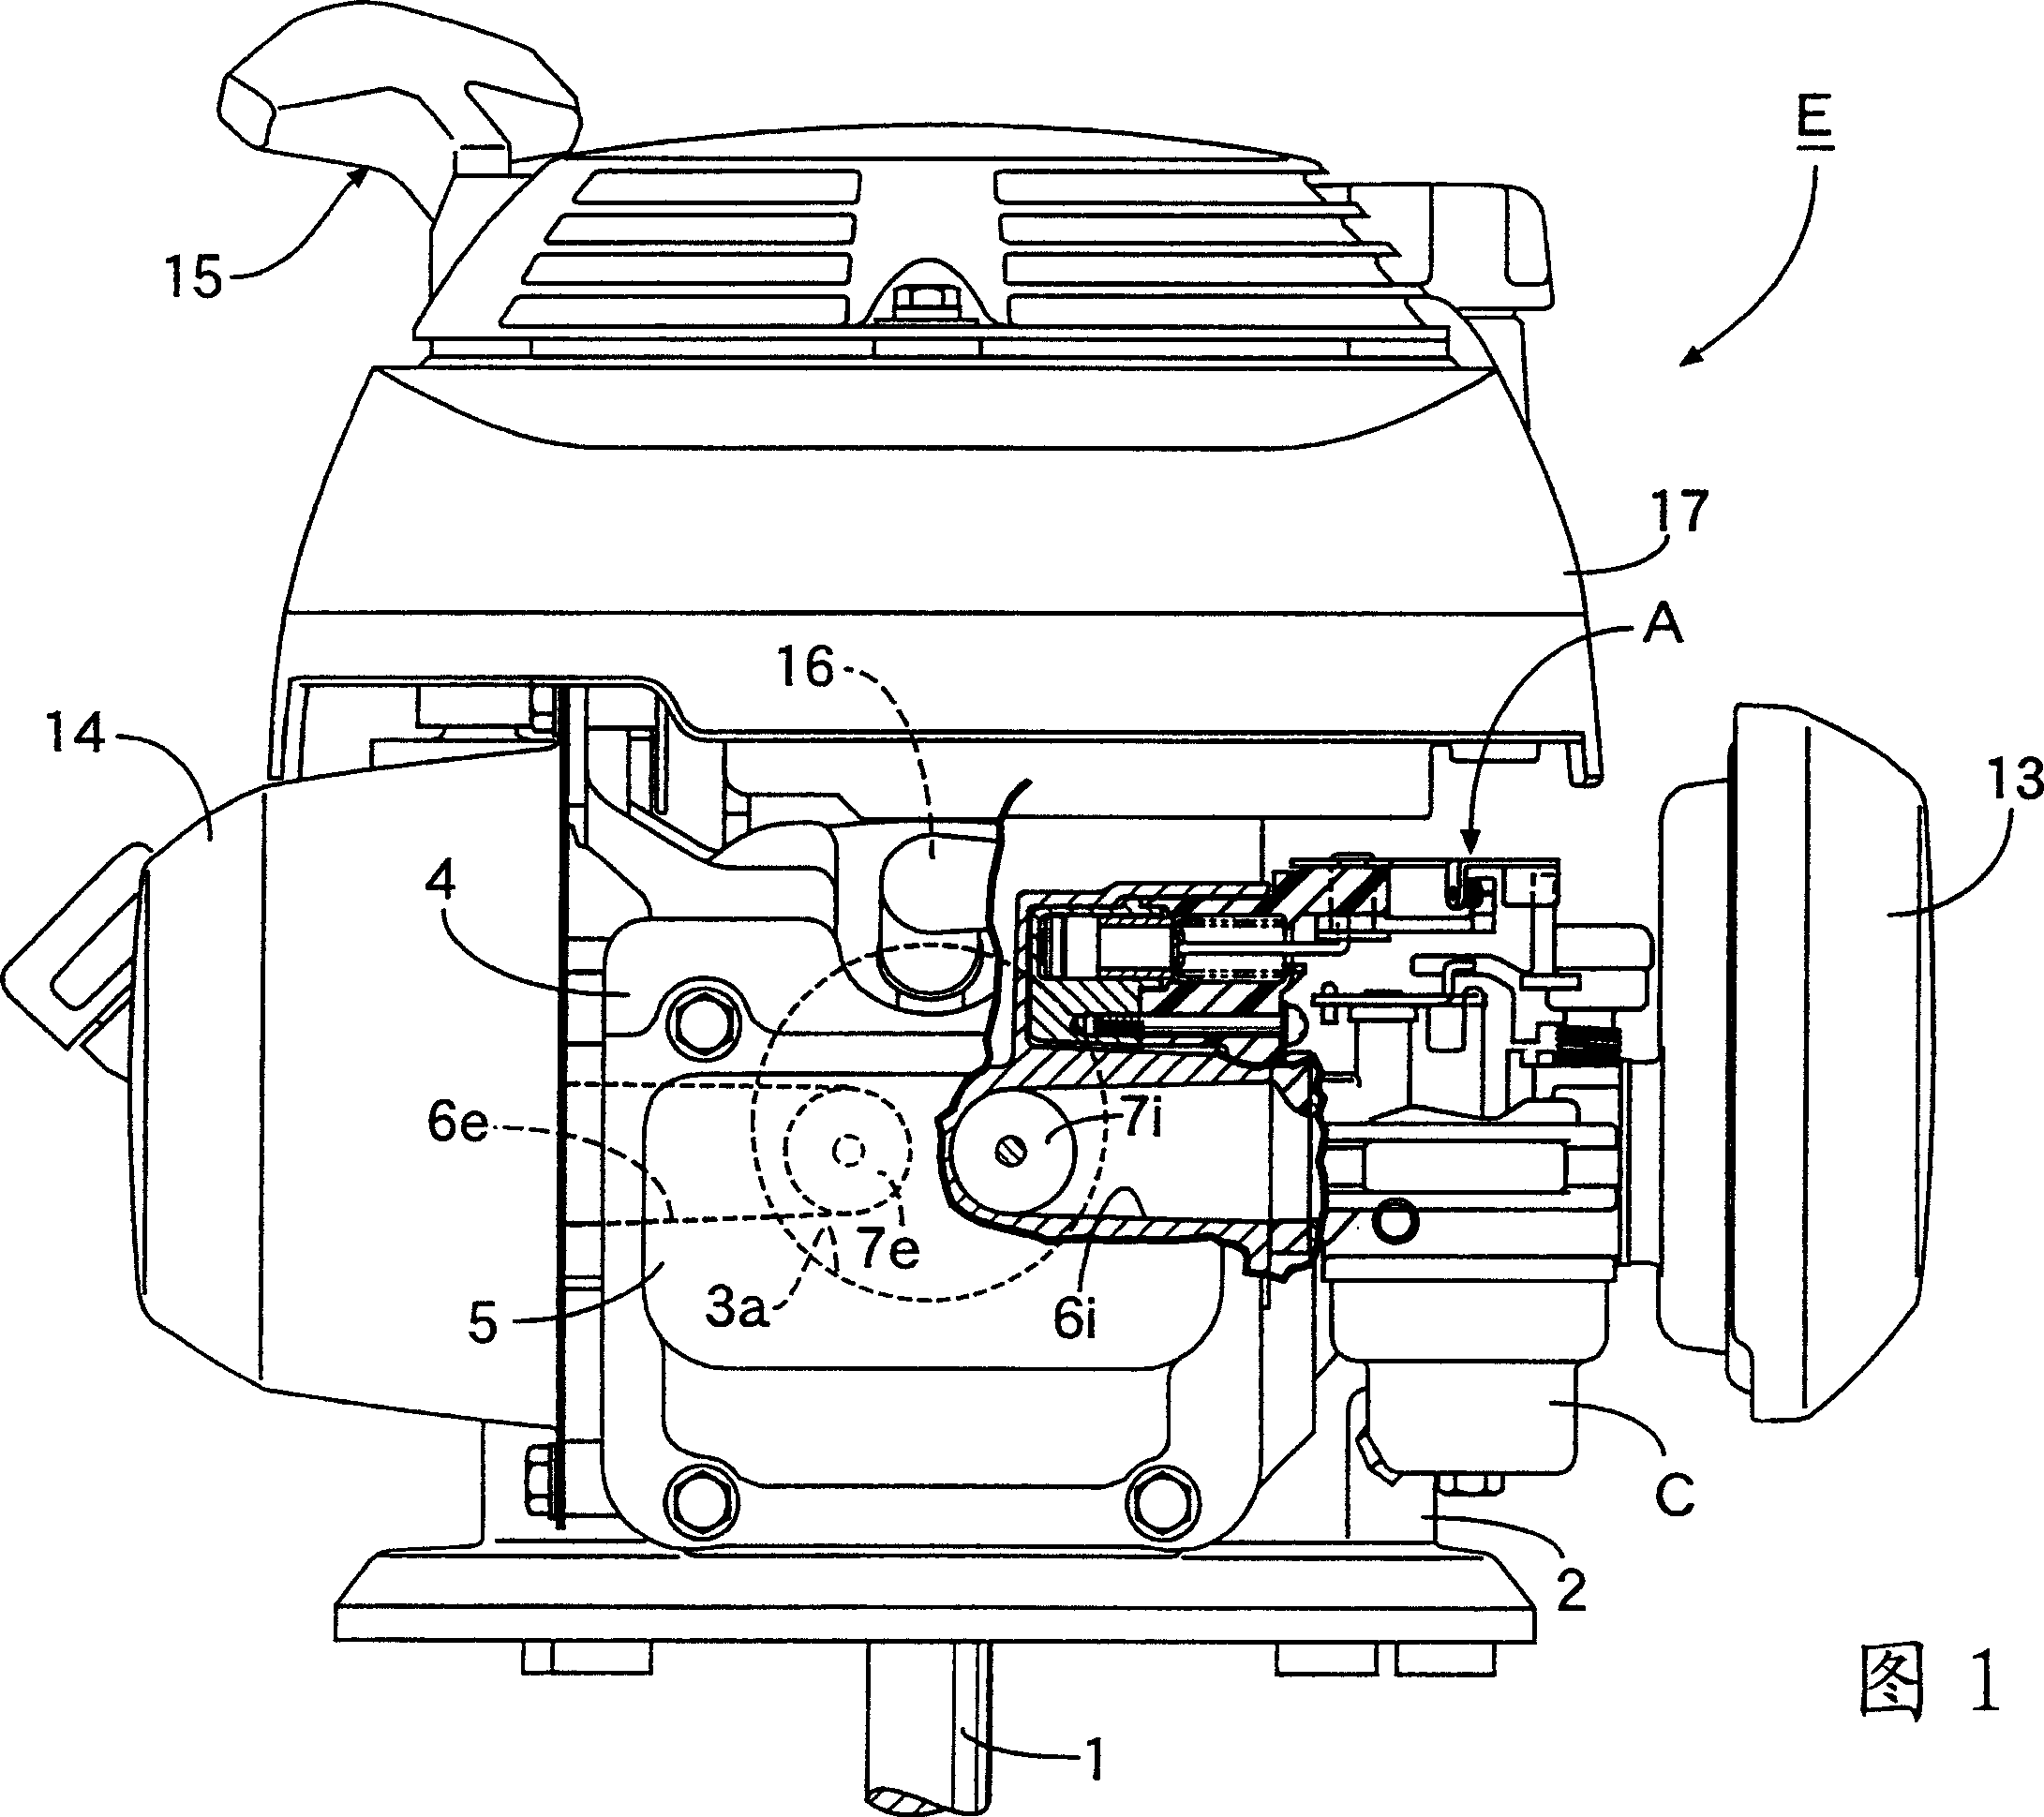 Automatic choke system for carburetor